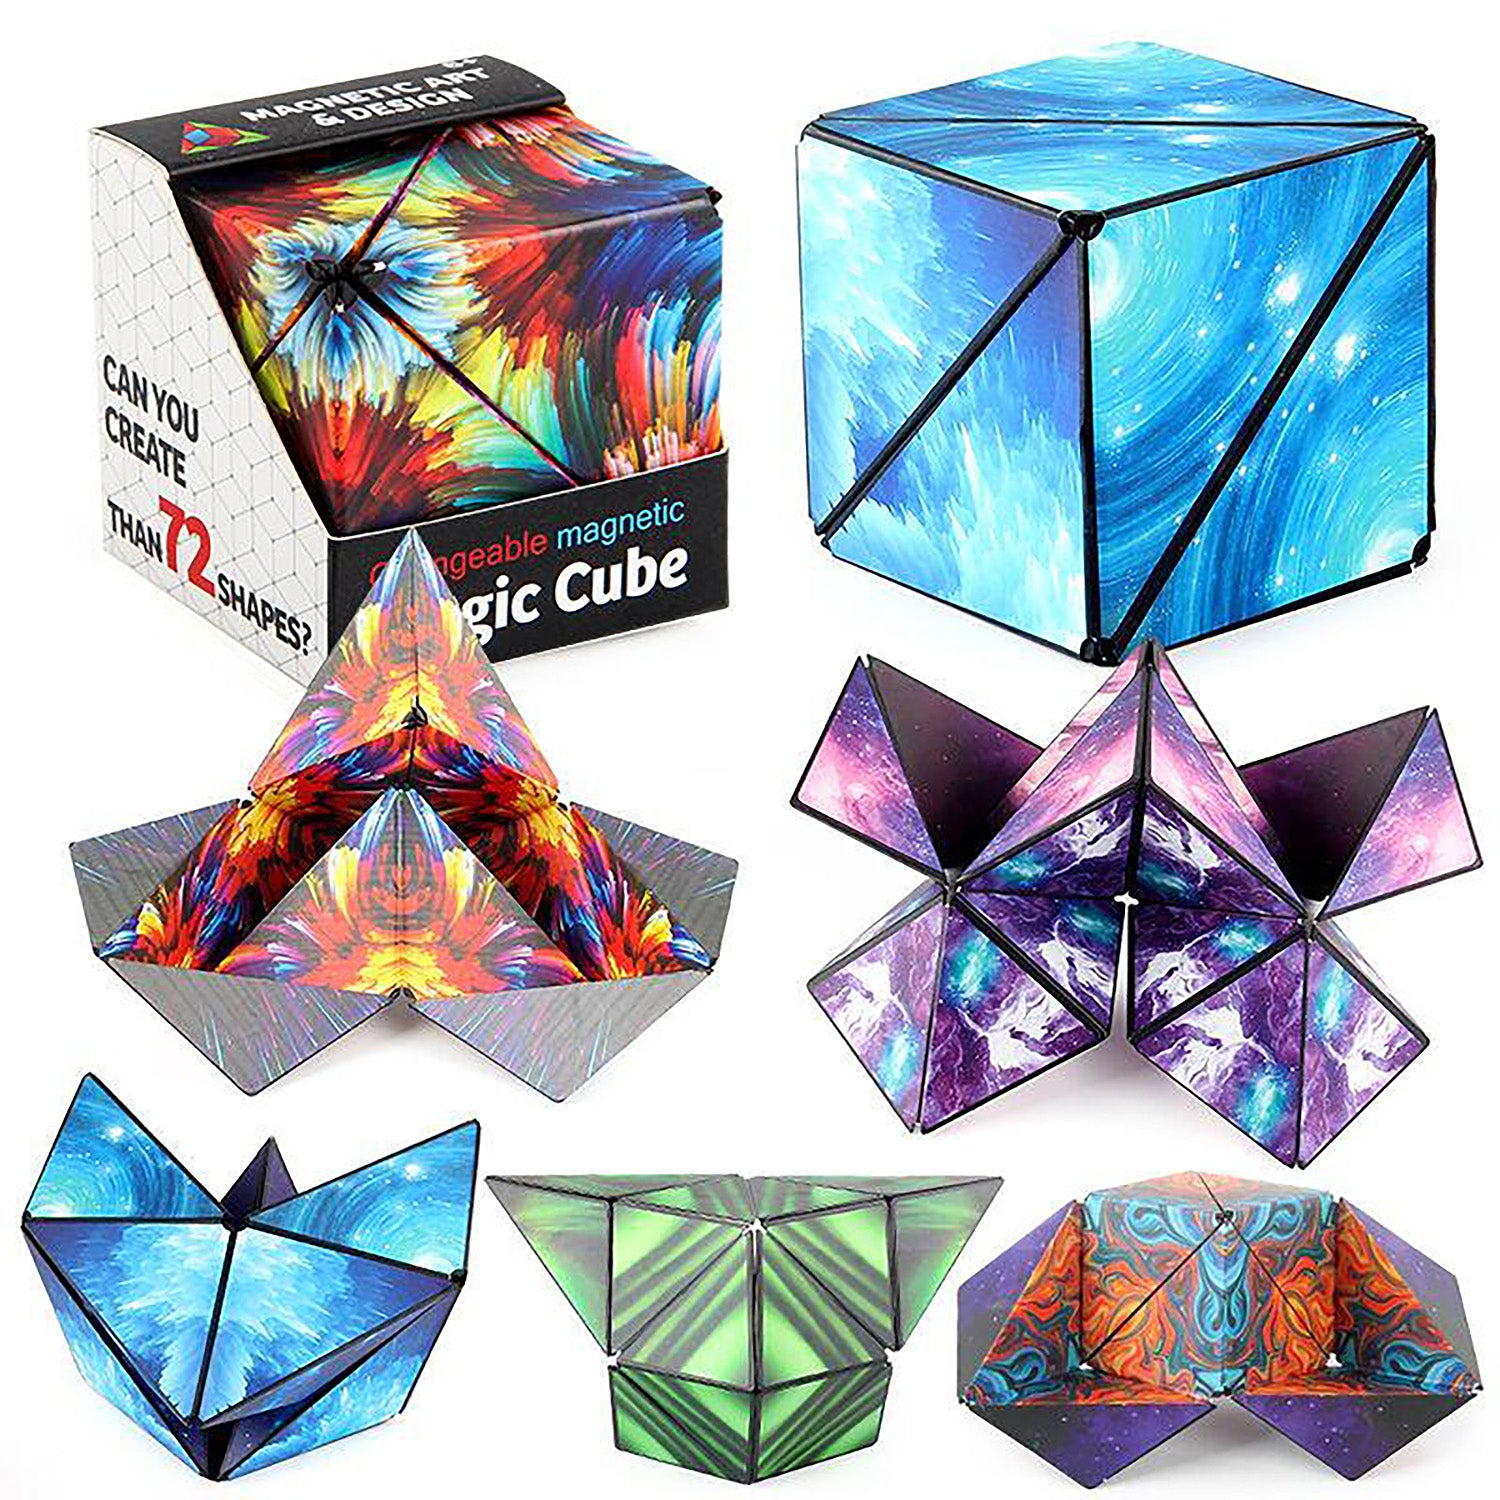 3D Changeable Magnetic Magic Cube, Shape Shifting Box Fidget Toy (Blue Version)